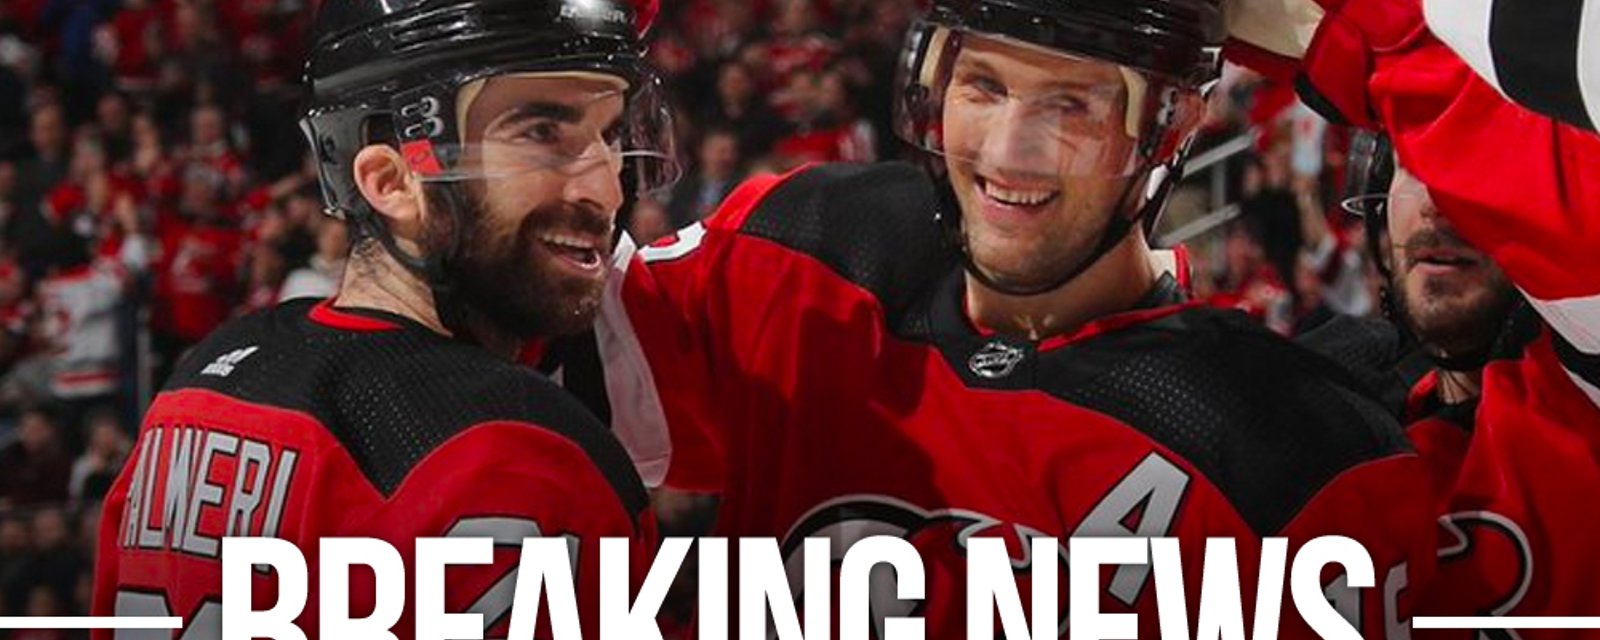 Devils trade forwards Kyle Palmieri and Travis Zajac